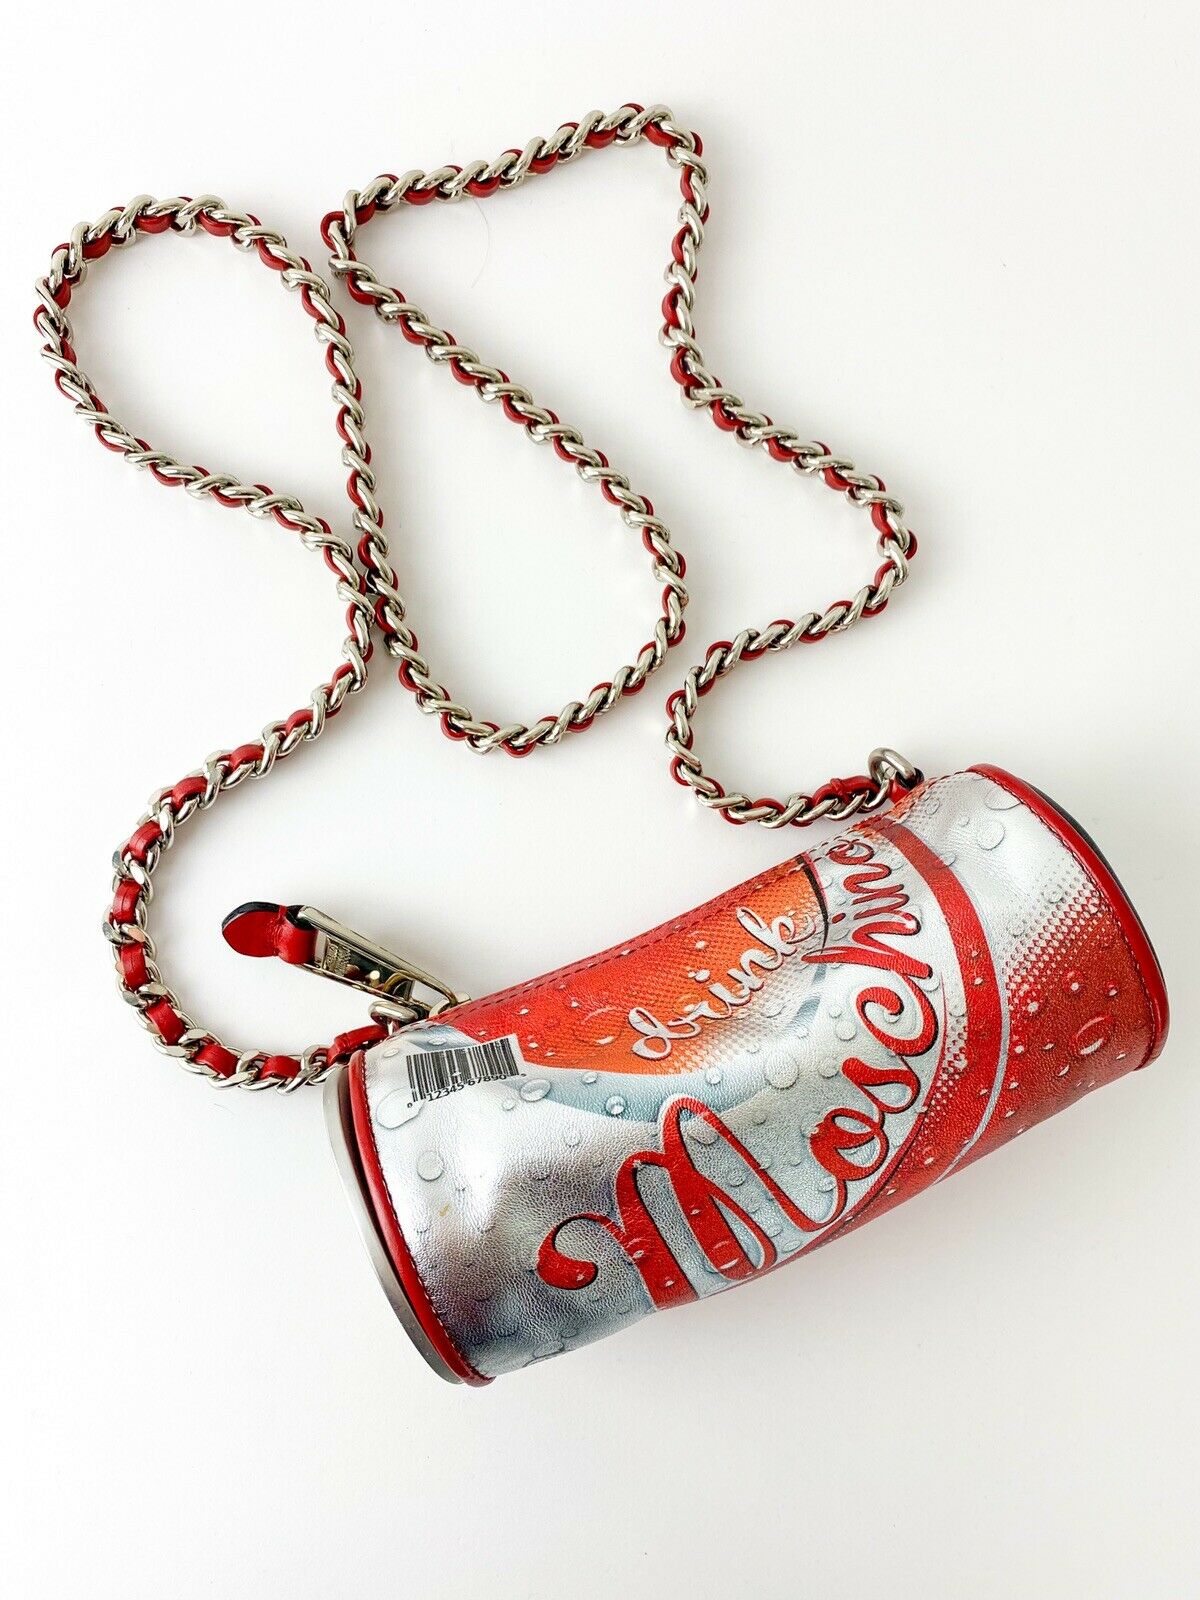 Coca cola, small type, pendant with metal loop, plastic